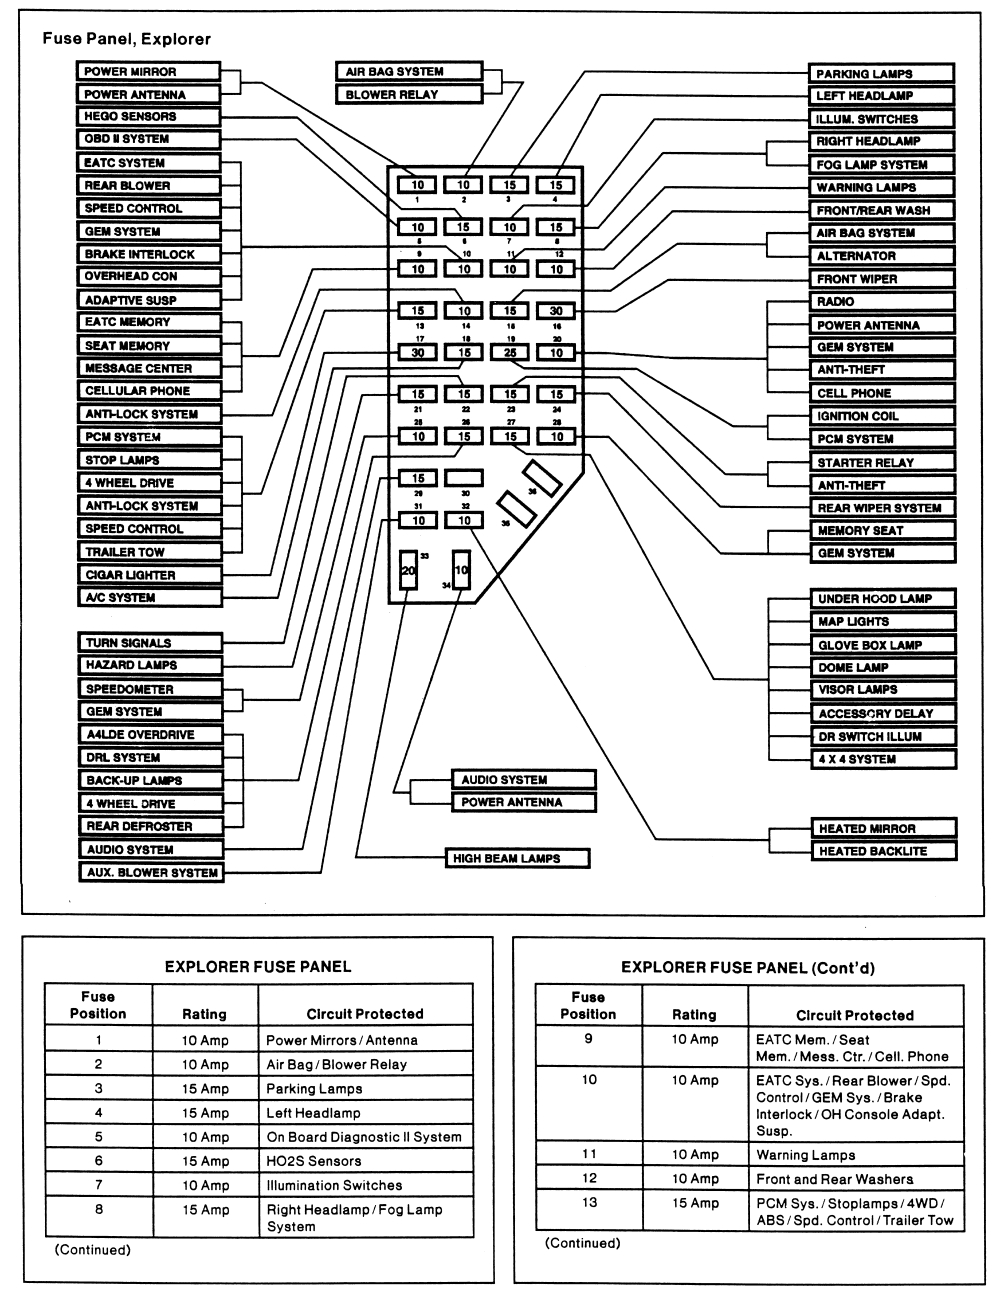 2003 Ford Ranger Fuse Box Diagram 2003 Ford Ranger Fuse Panel Diagram Wiring Diagram Review